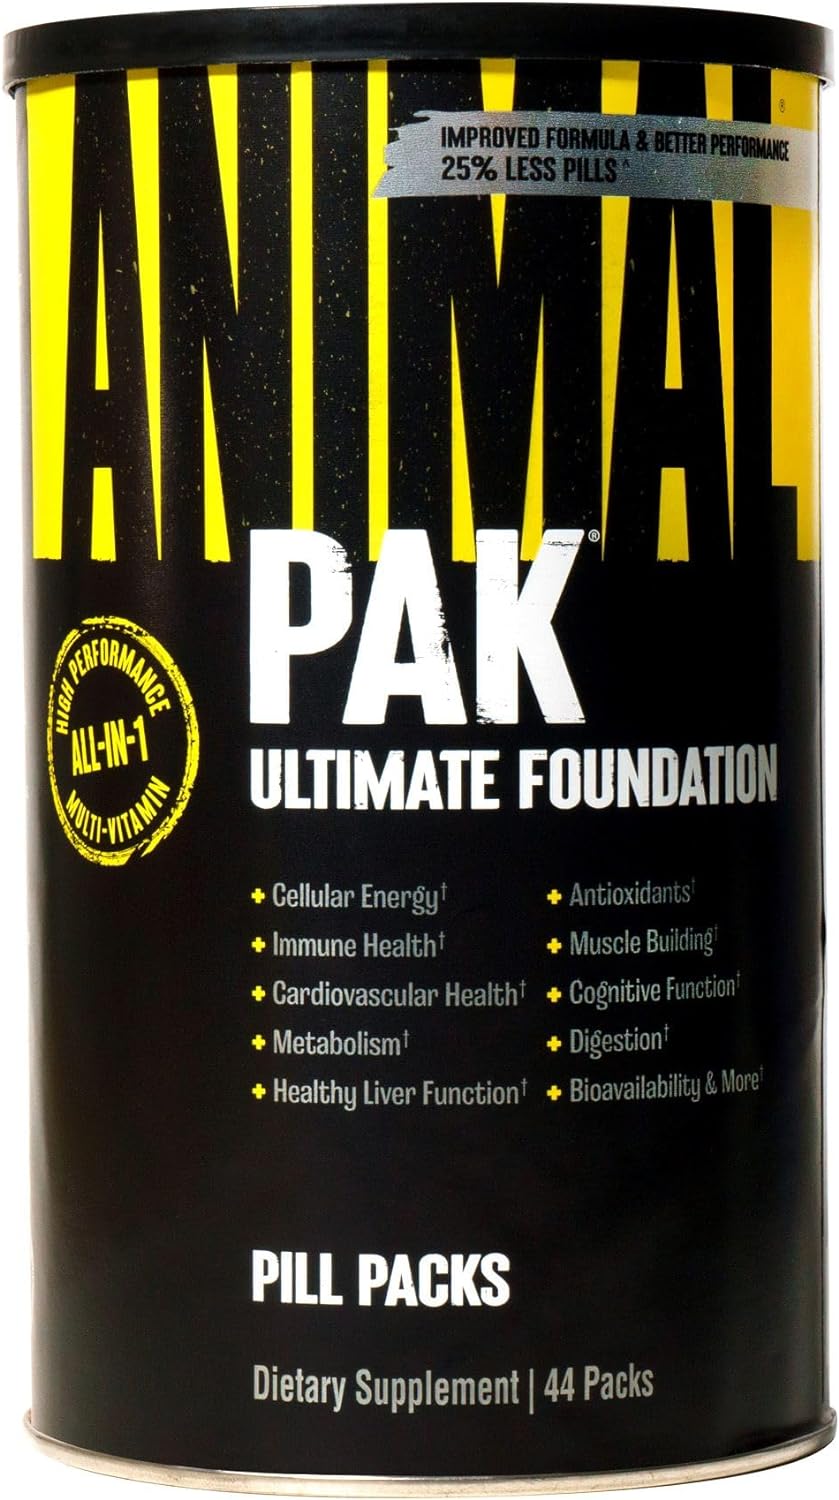 Universal Nutrition Animal Training Pak - 44 Pack(s)